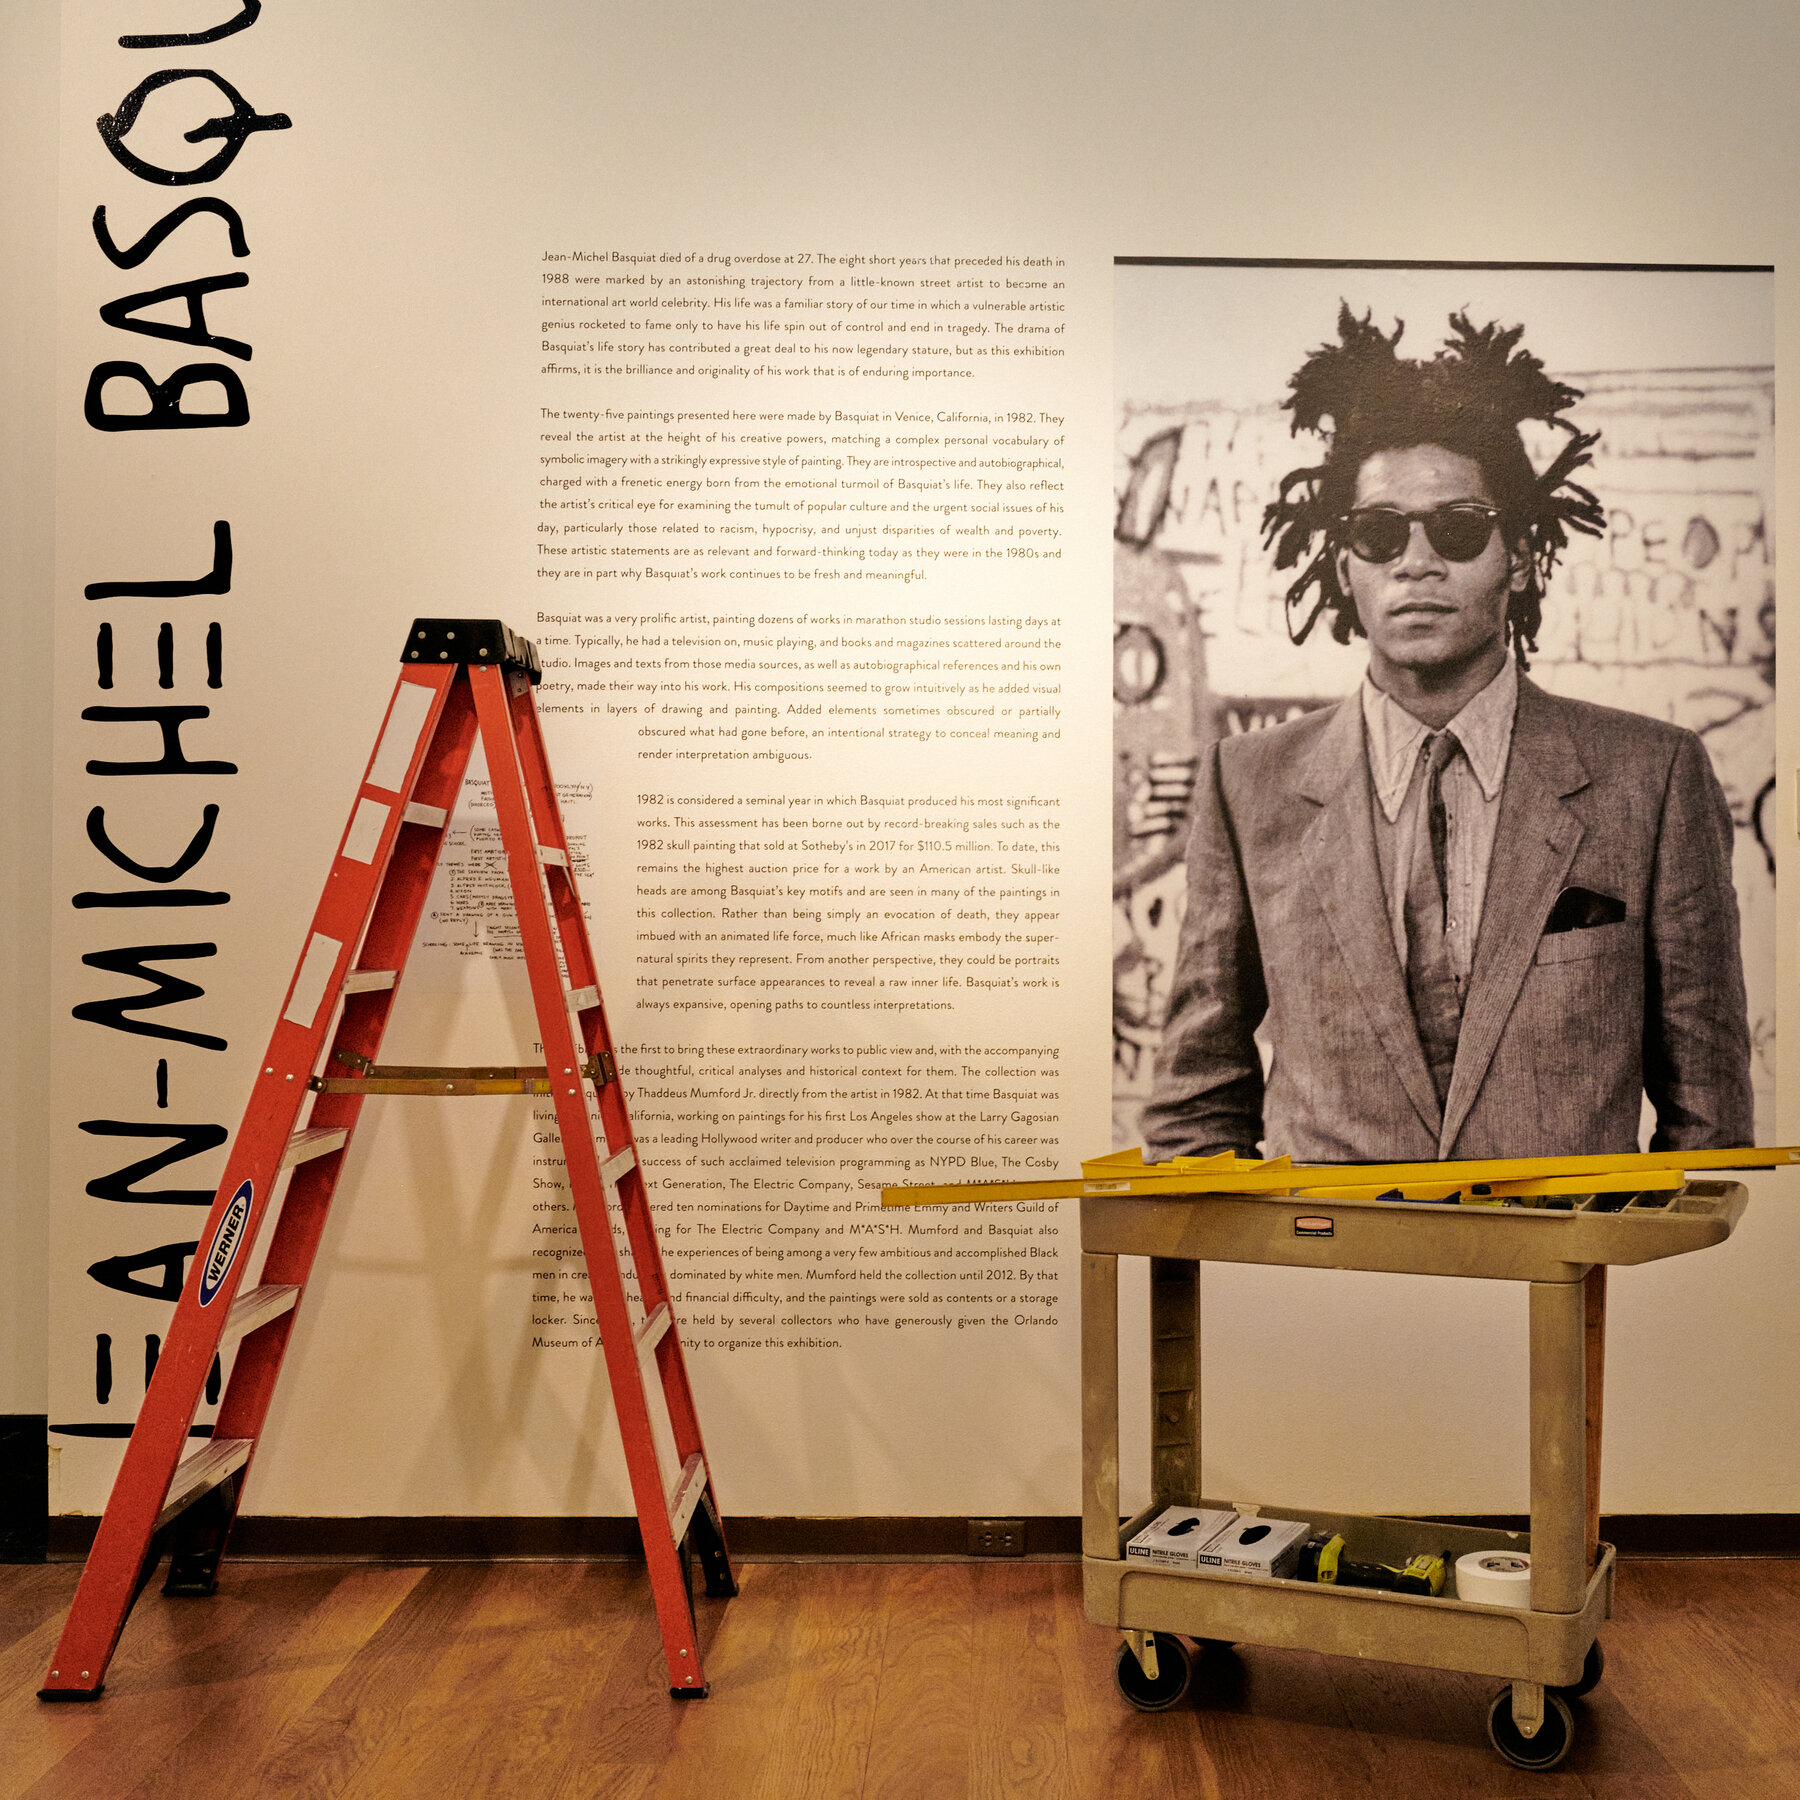 Orlando Museum Of Art Accused of Displaying Fake Jean-Michel Basquiat Paintings